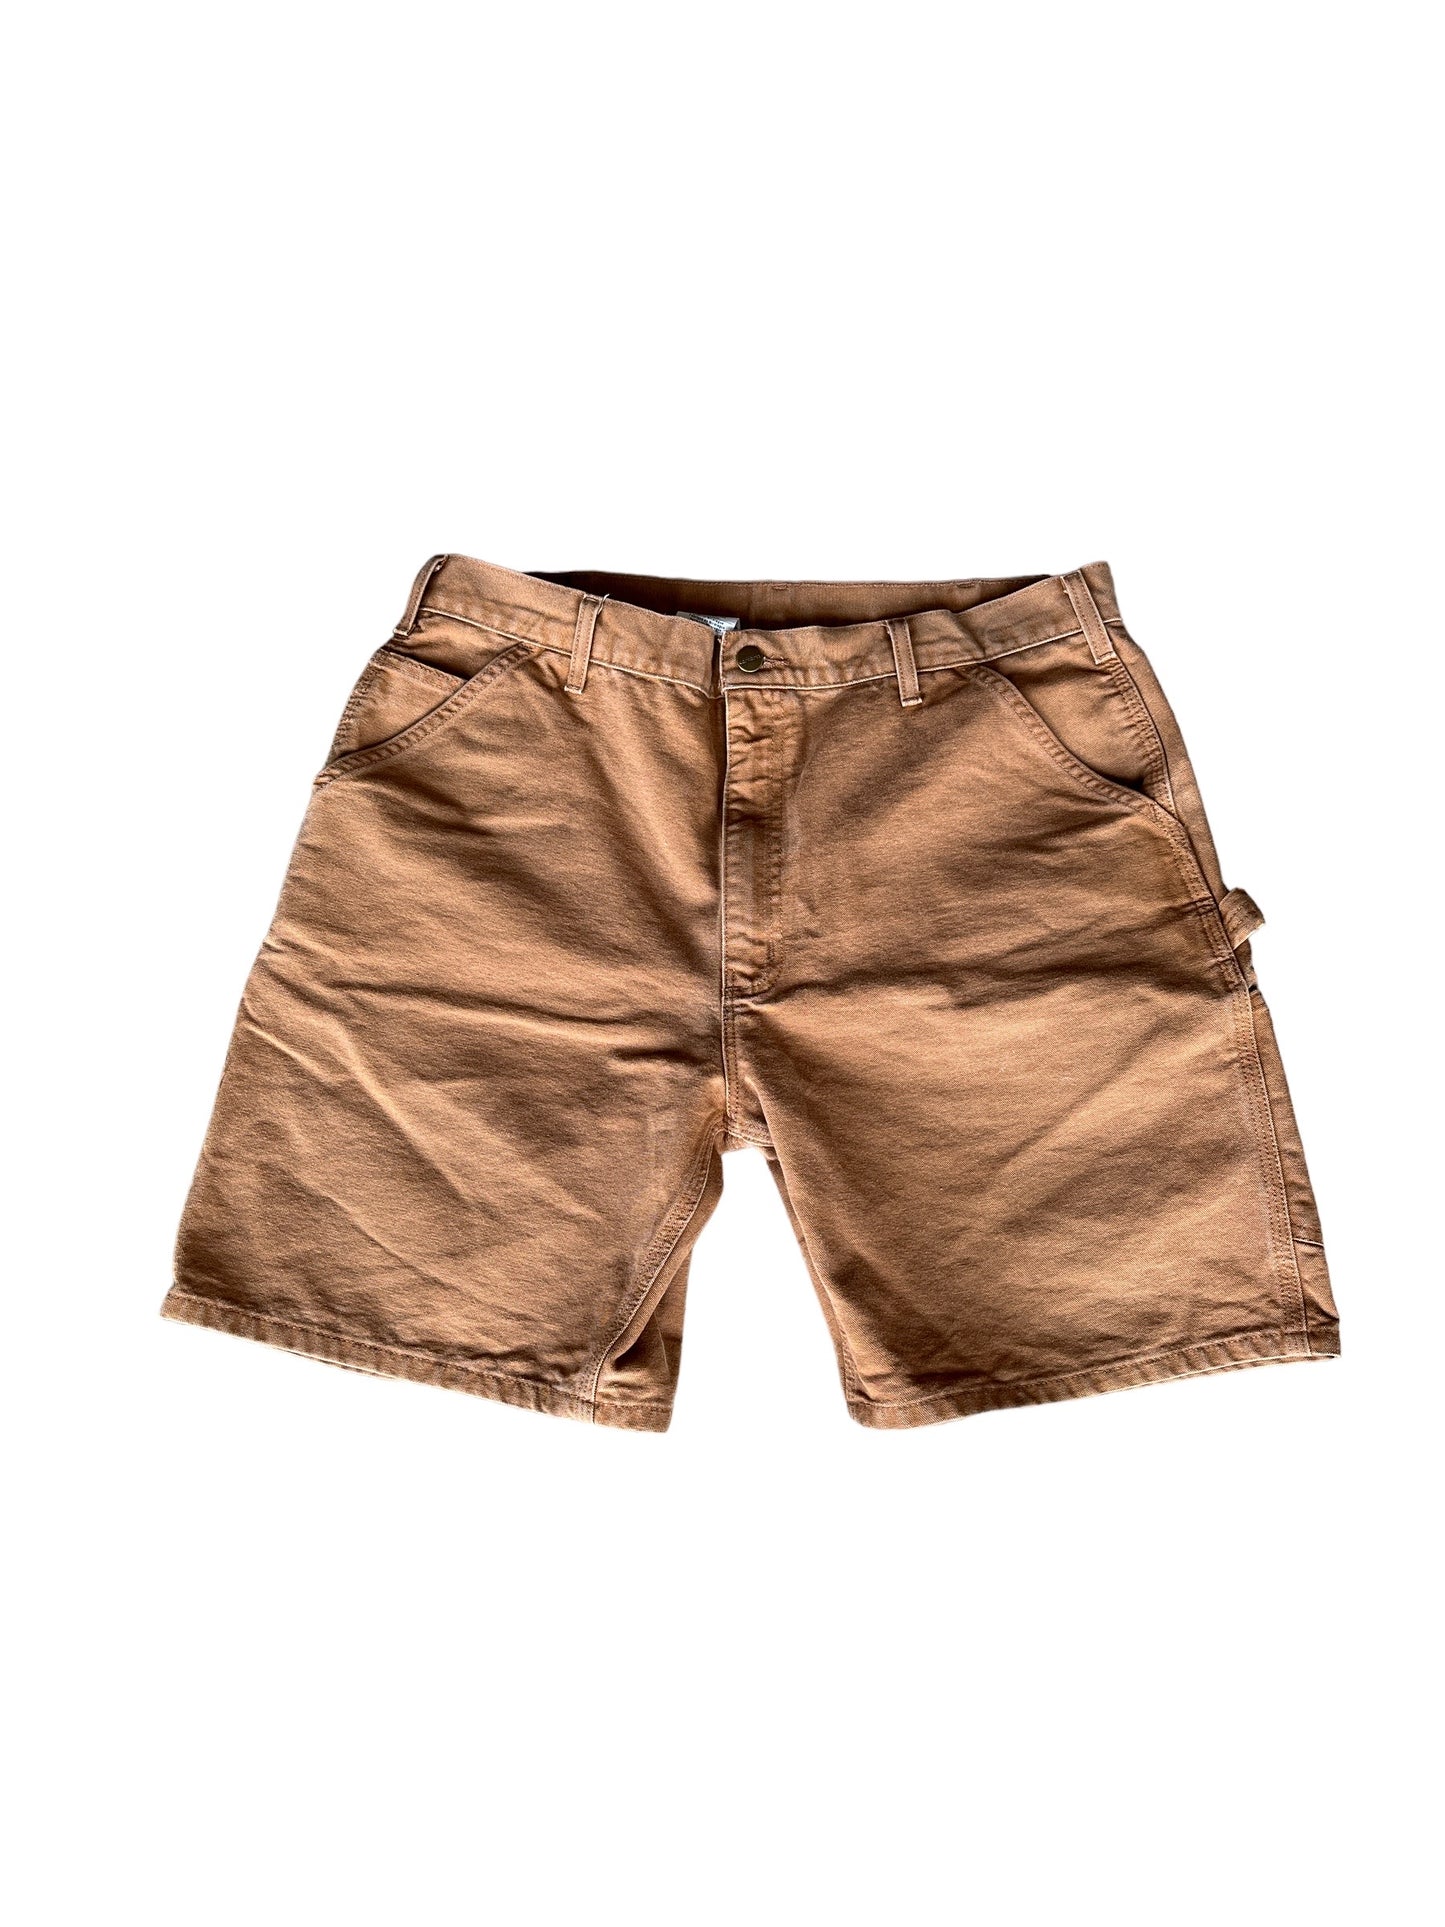 Vintage Carhartt Shorts - Duck Brown